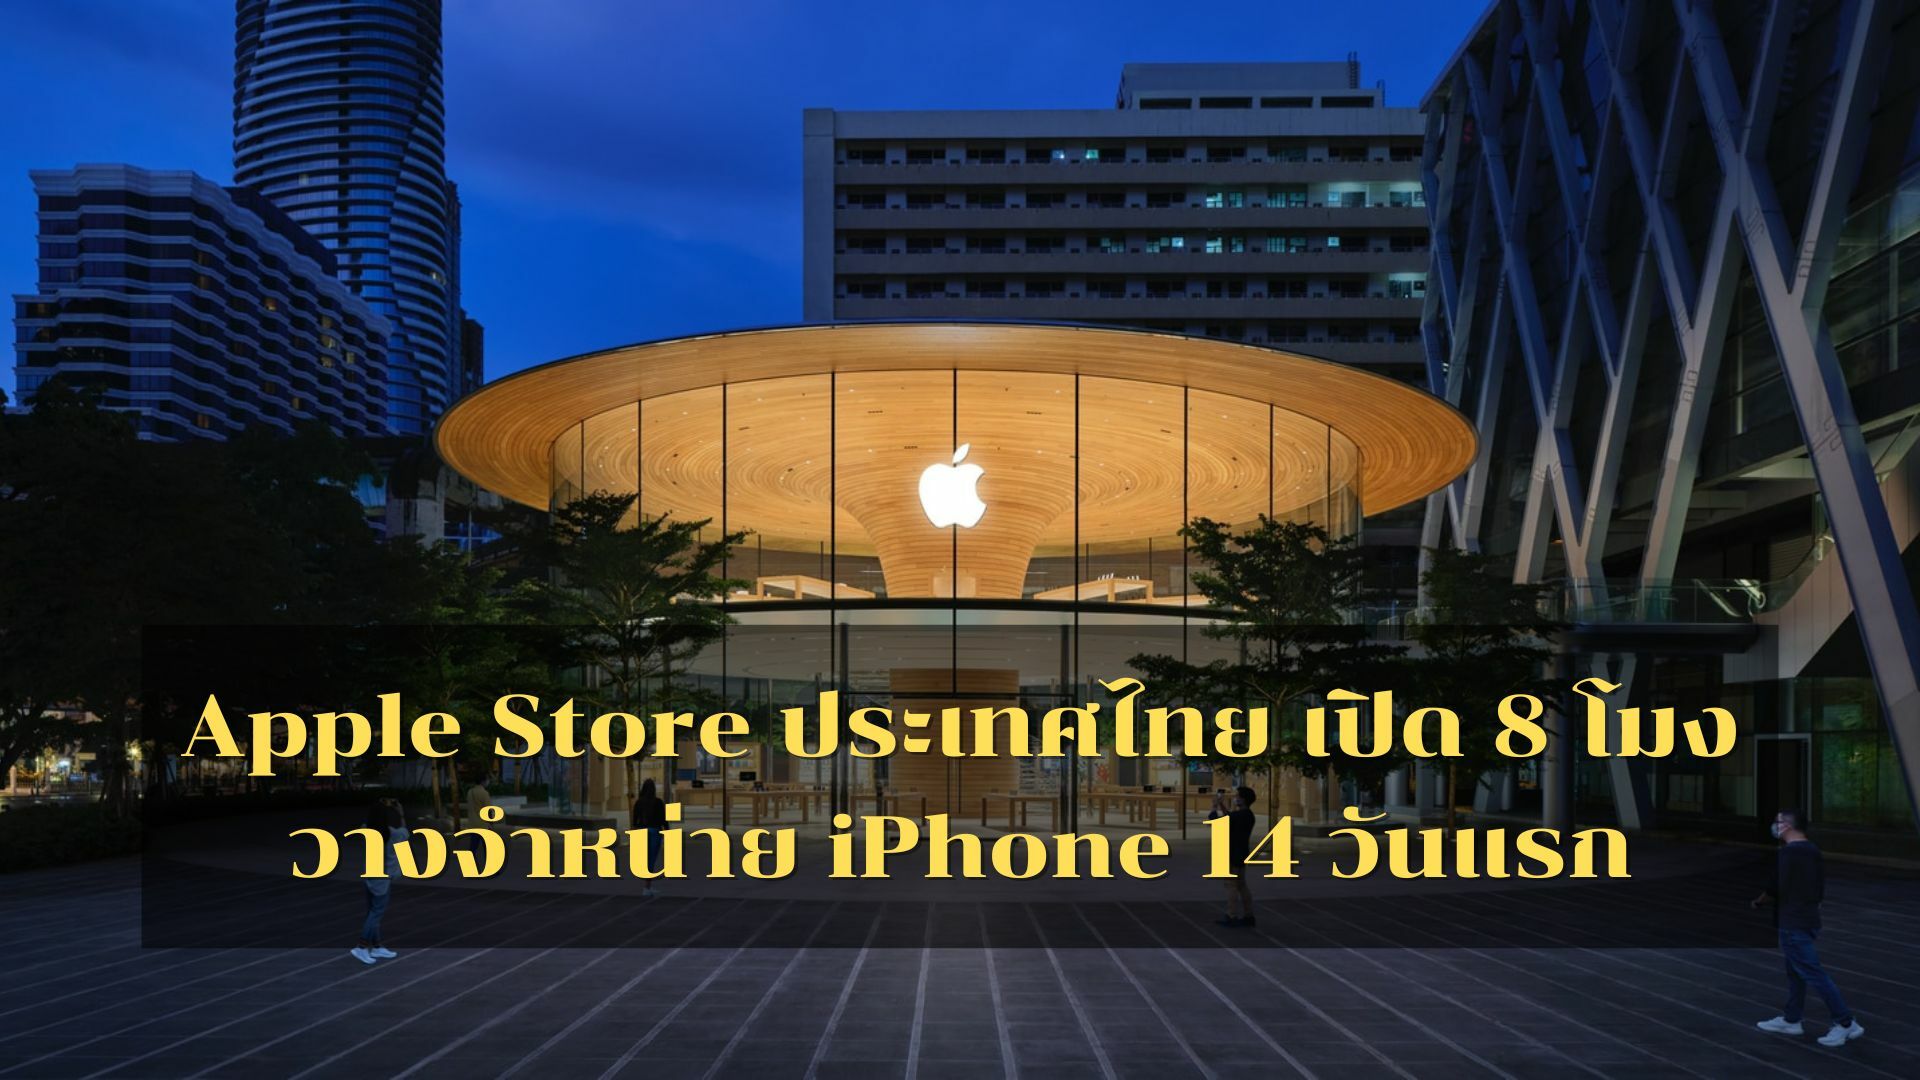 Apple เปิดร้าน 8 โมง iPhone 14